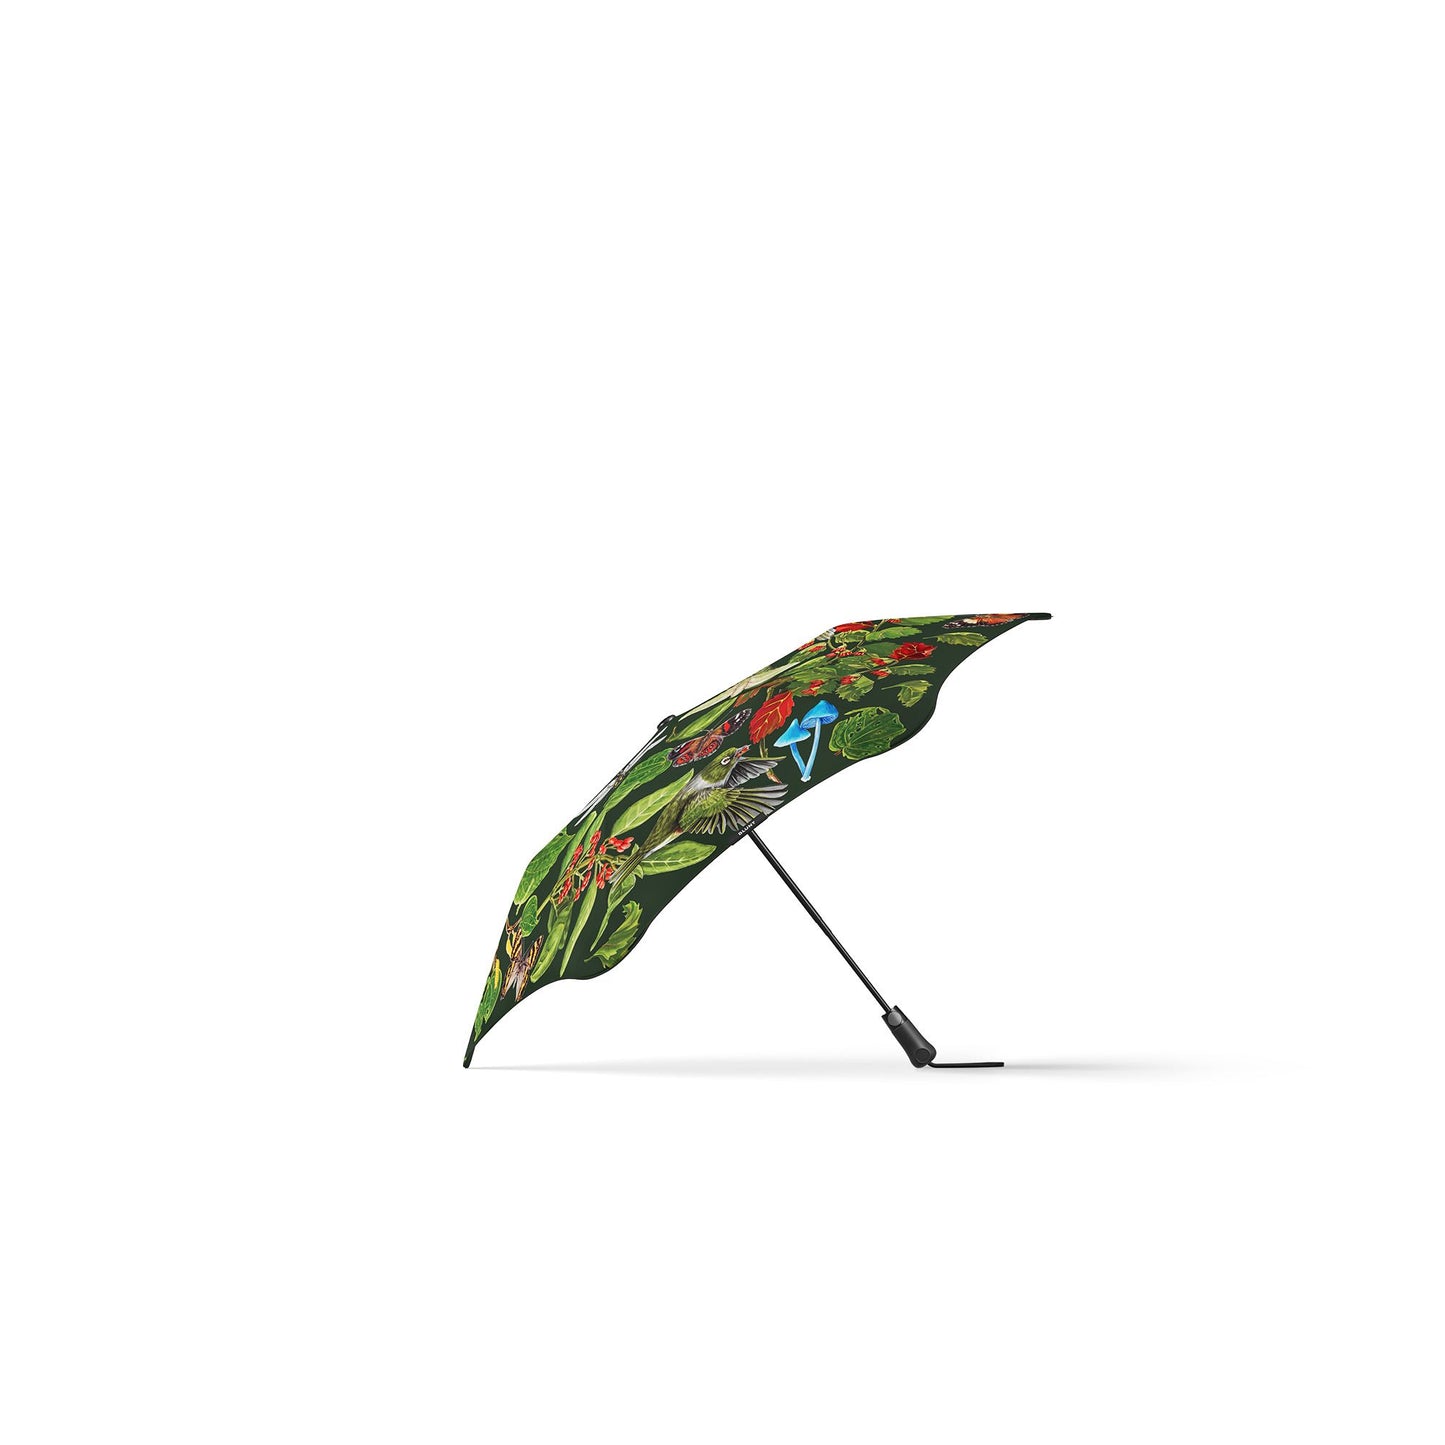 Blunt Metro Umbrella . Limited Edition . Forest